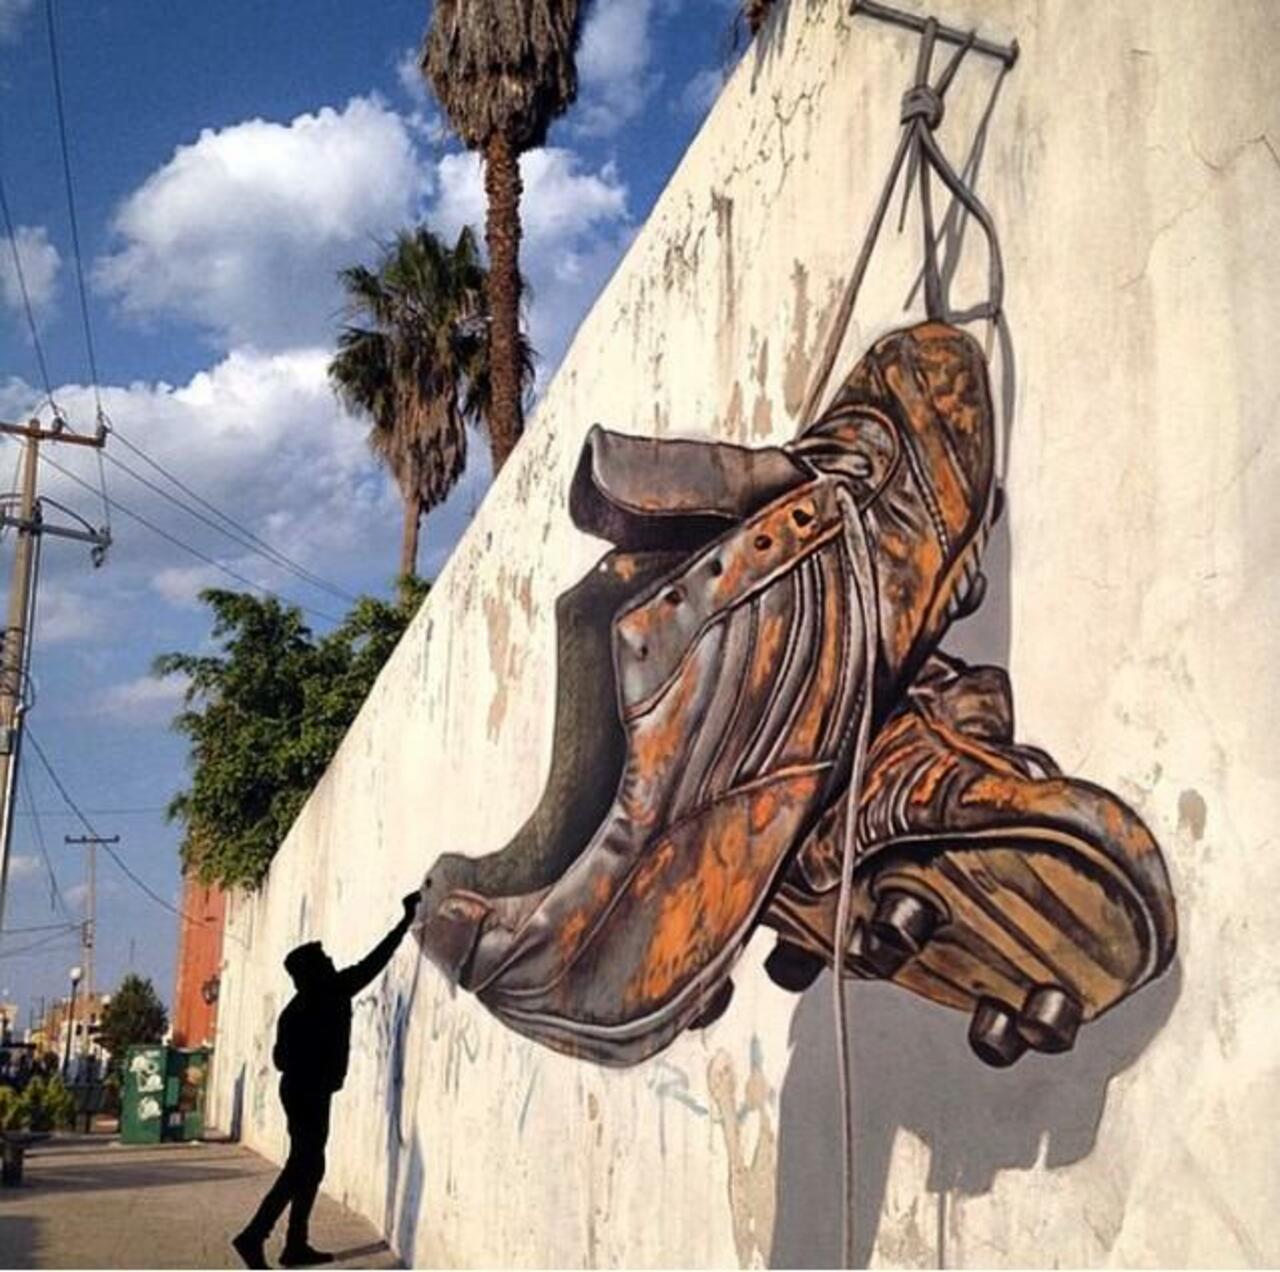 Awesome anamorphic 3D Street Art by Juandres Vera 

#art #graffiti #mural #streetart http://t.co/3jX2bwxExl